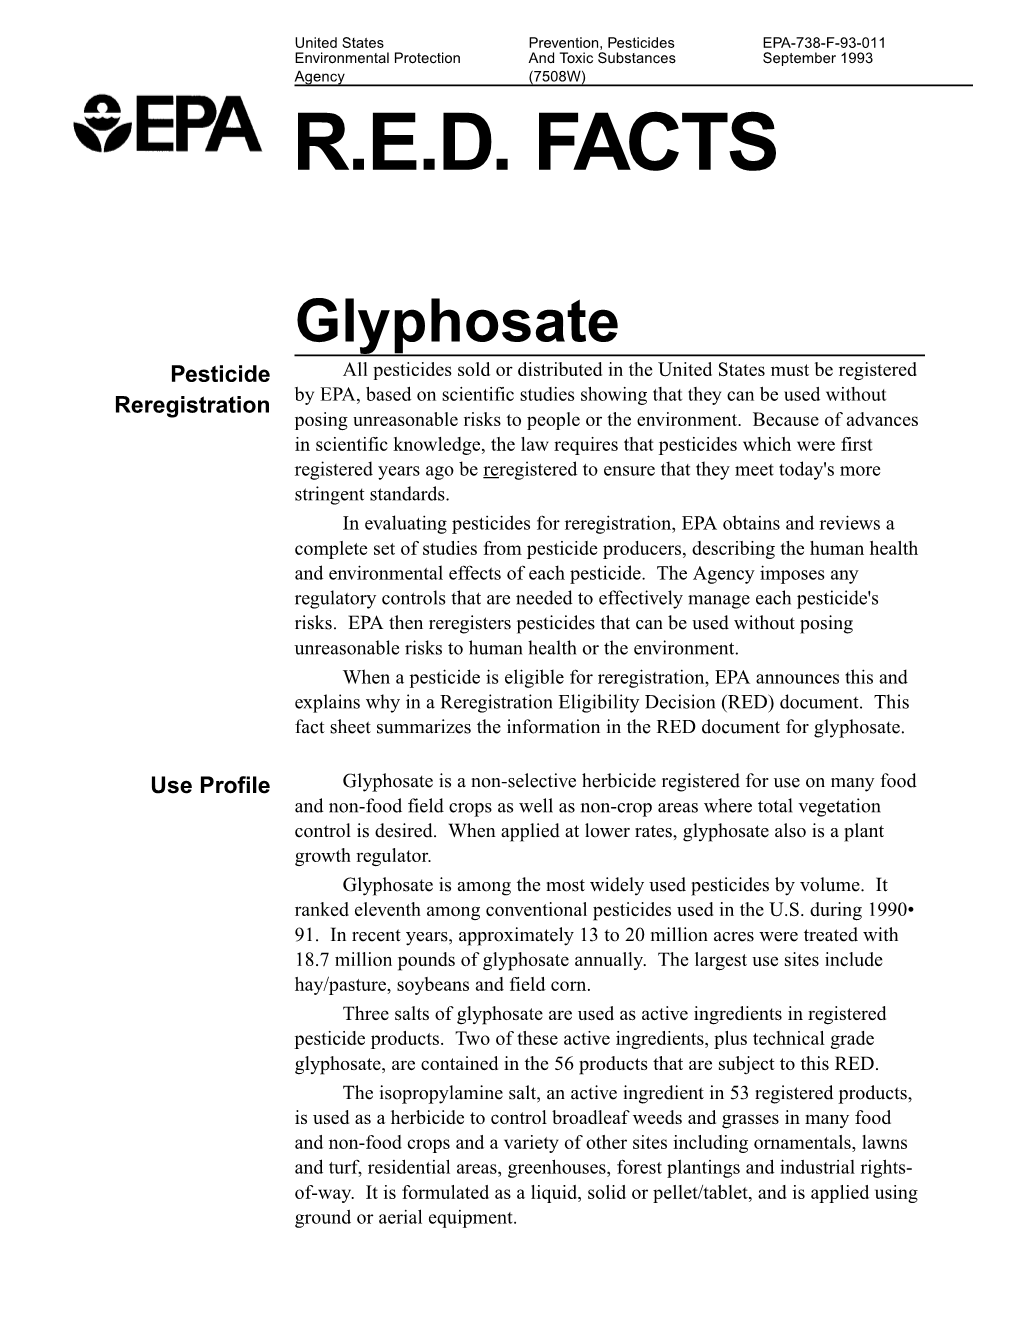 Fact Sheet for Glyphosate